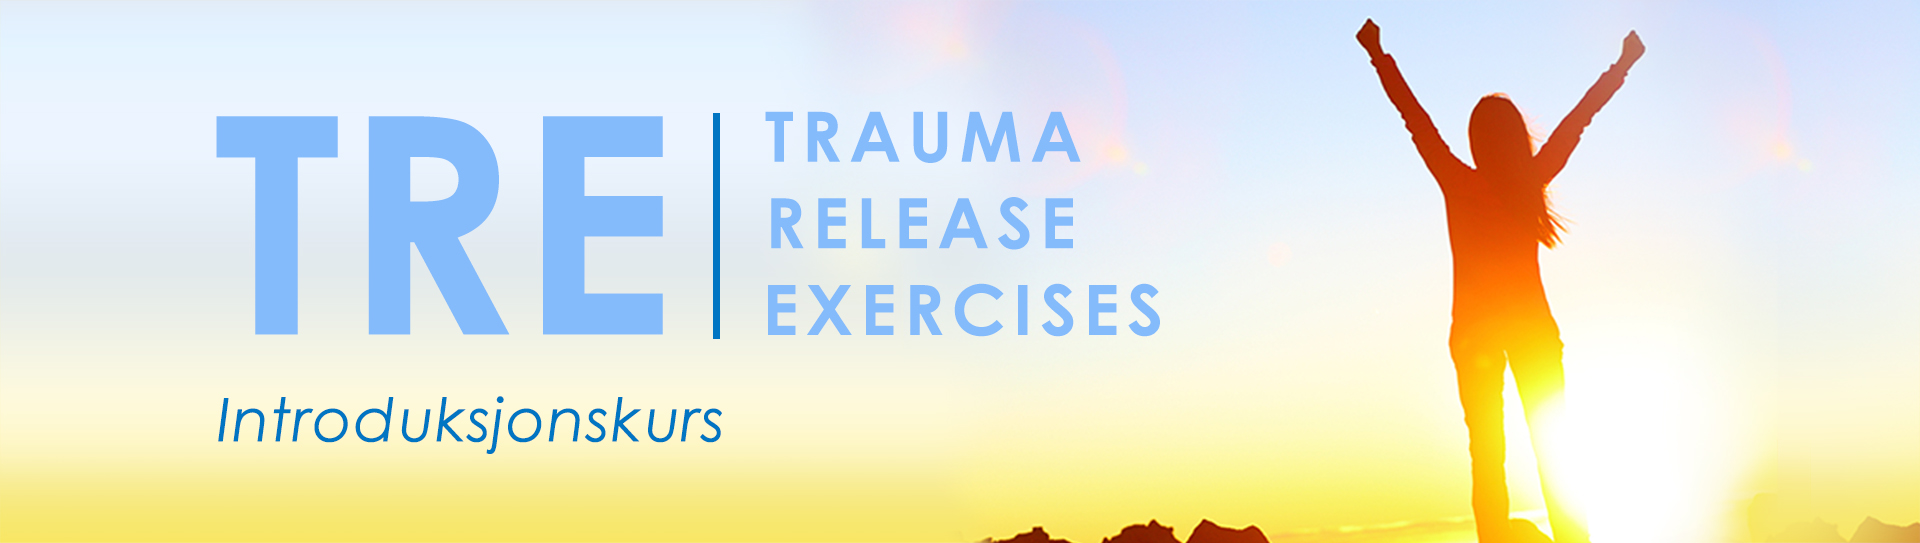 TRE trauma release exercises introduksjonskurs